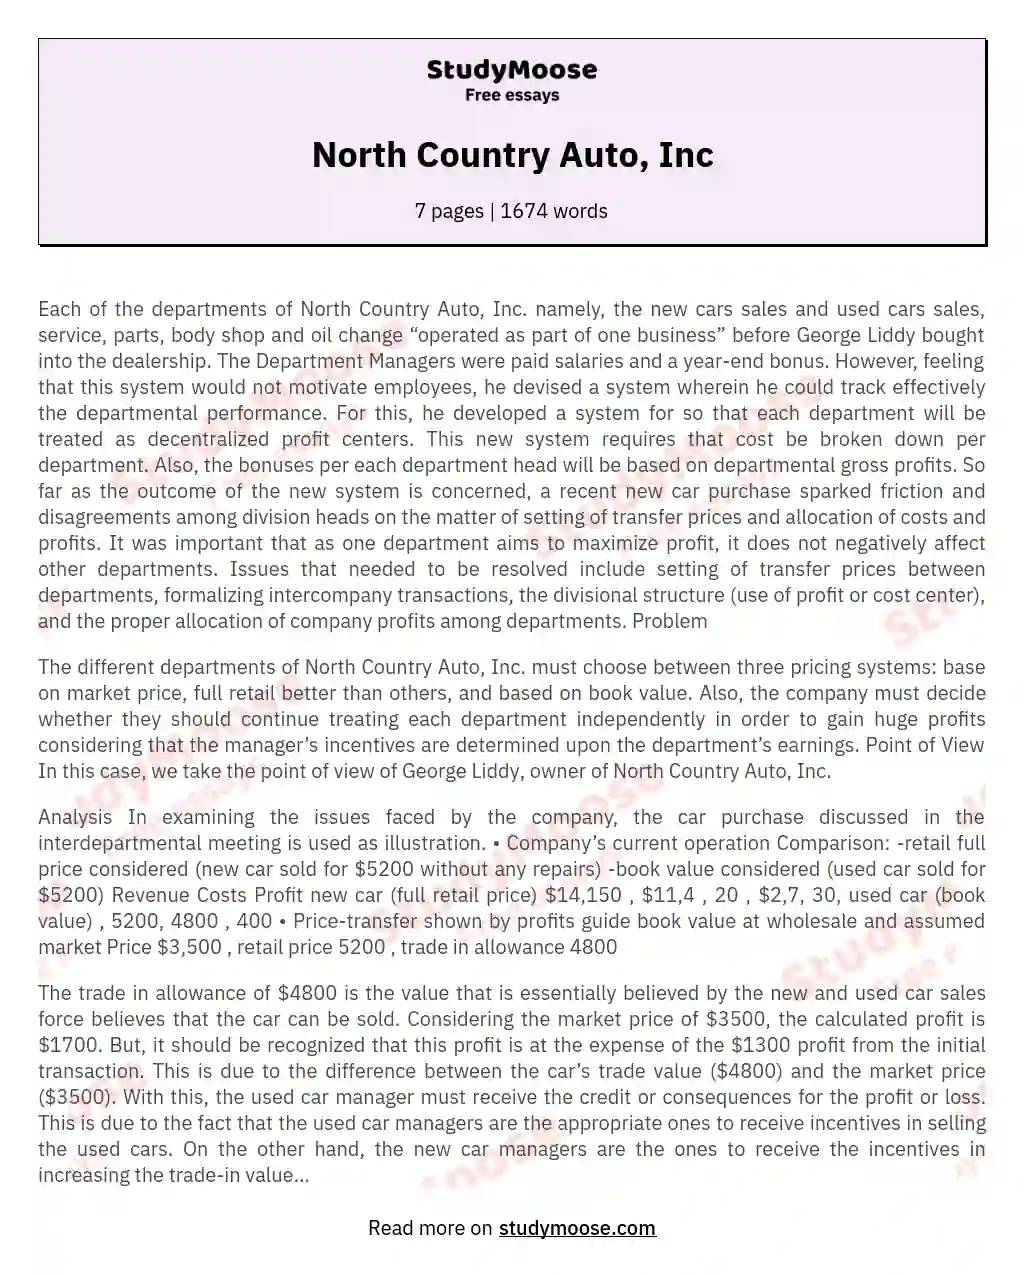 North Country Auto, Inc essay